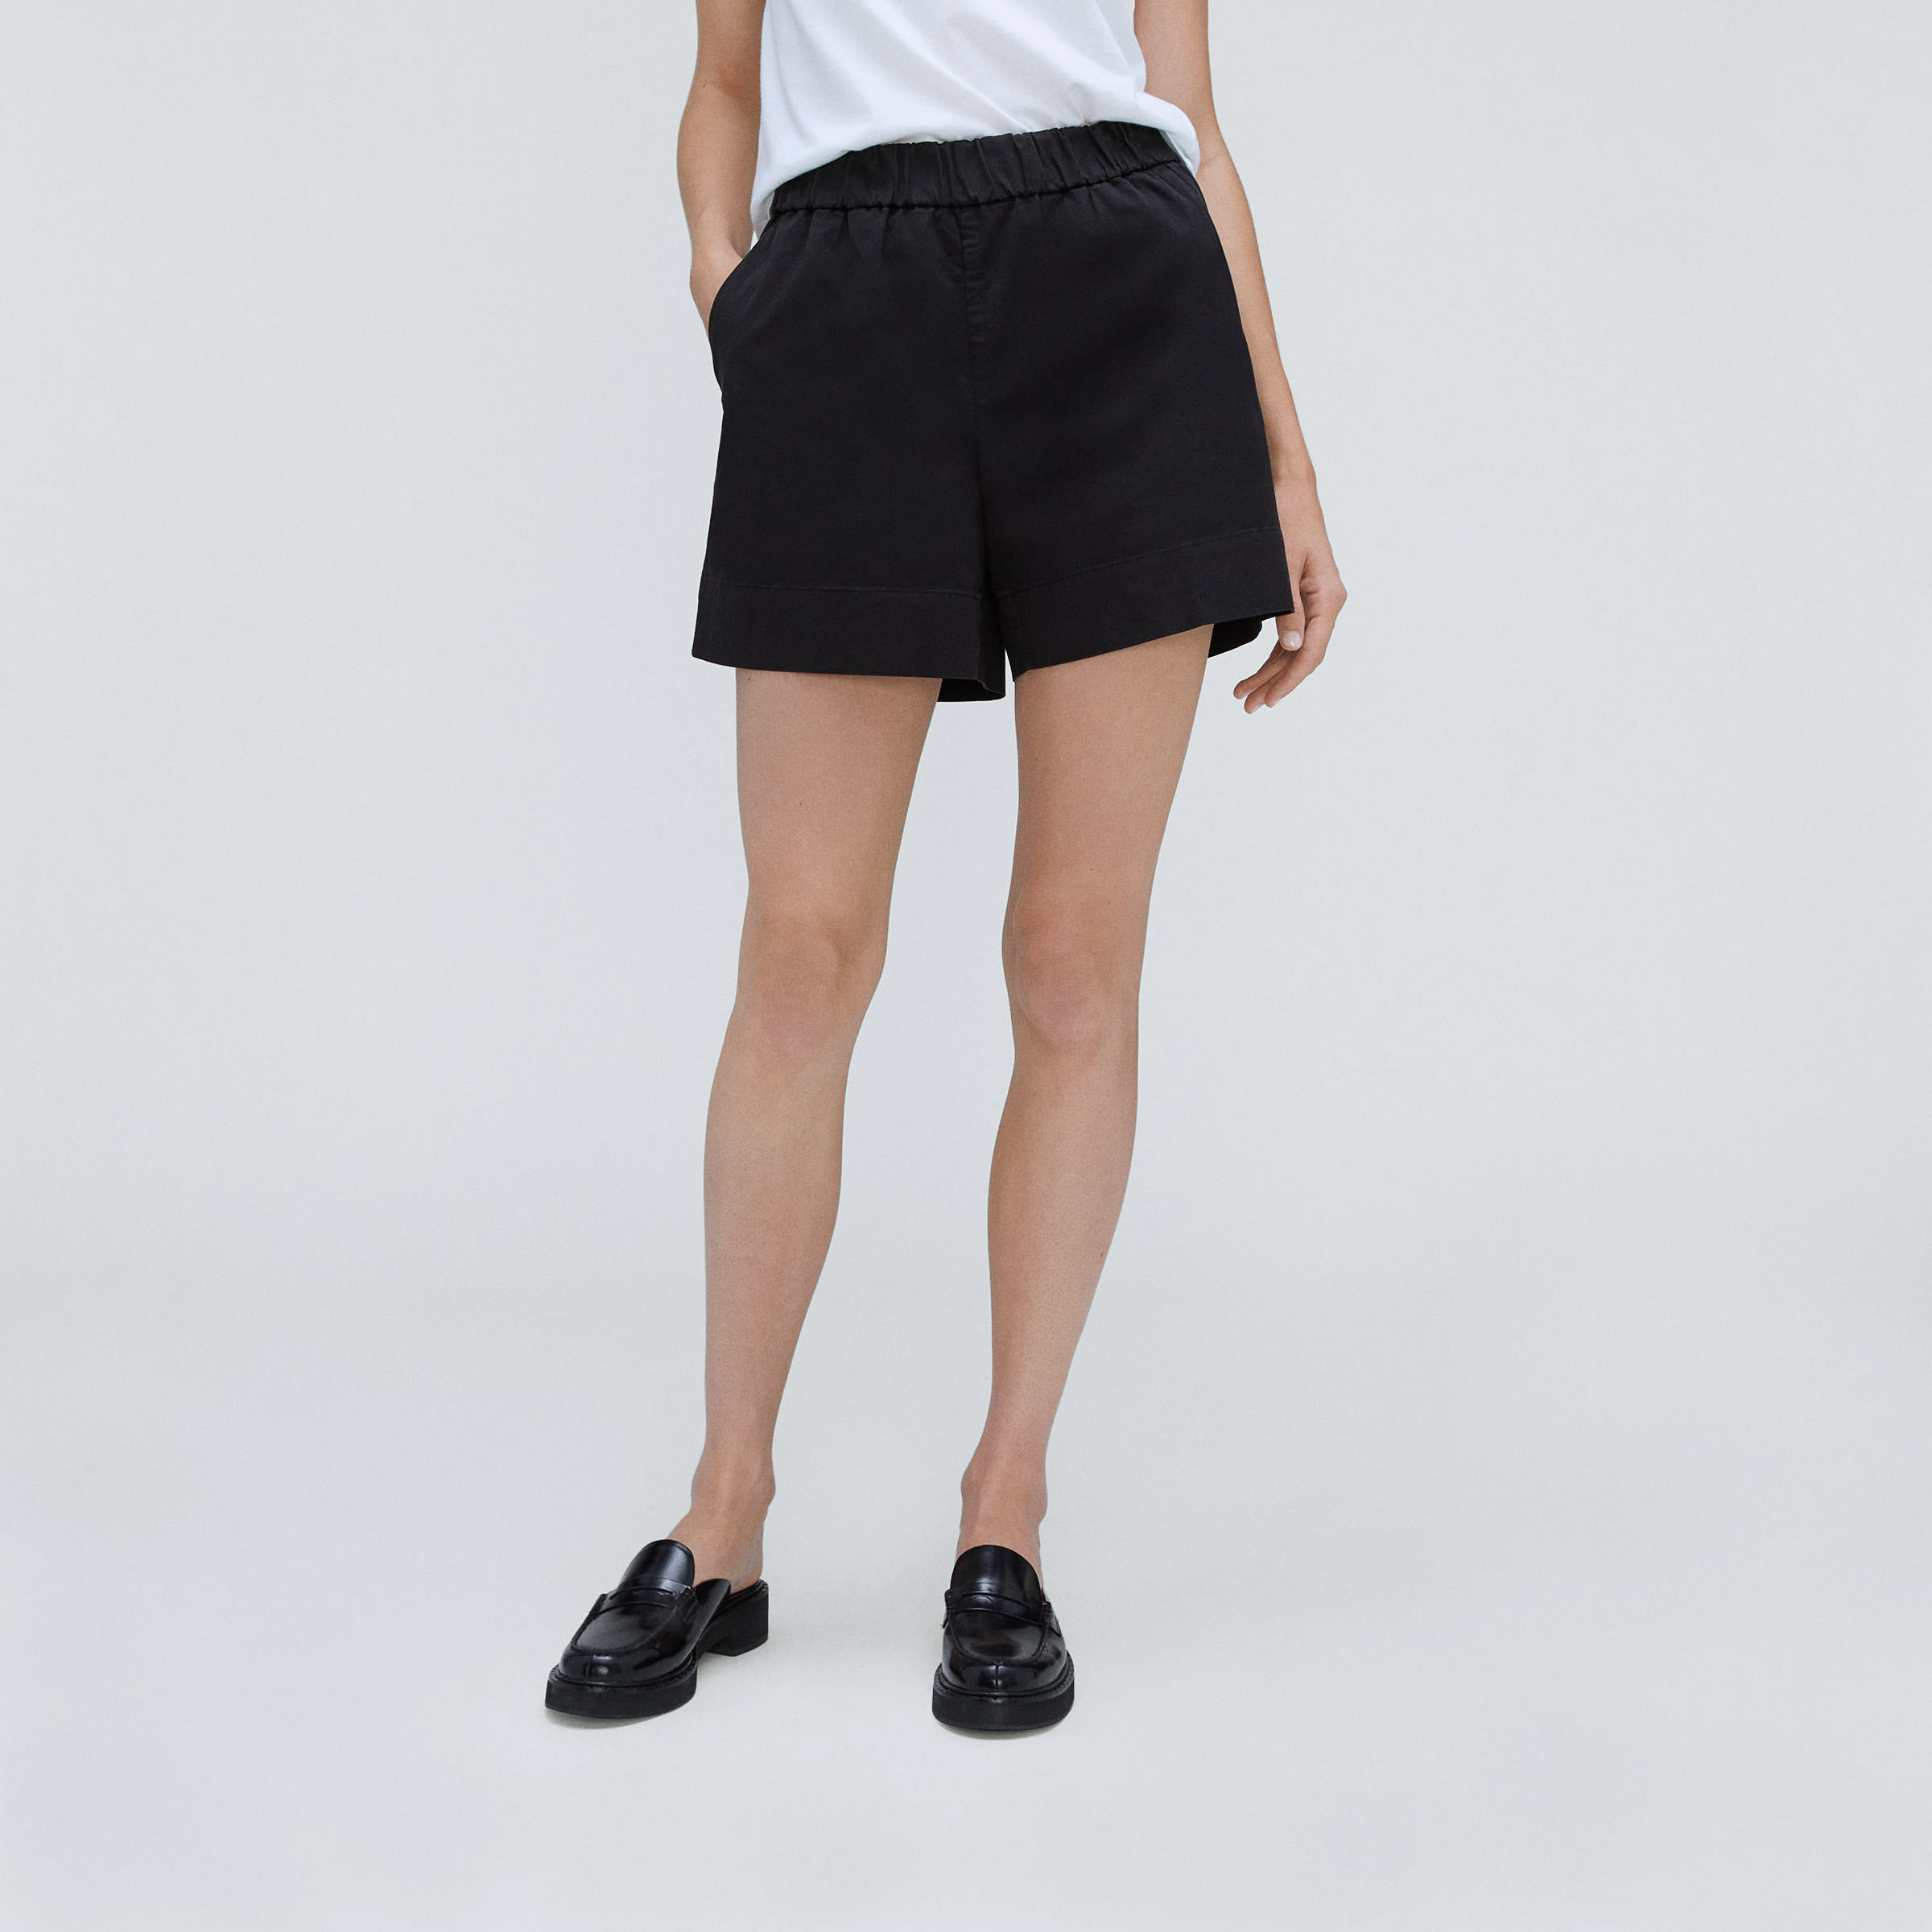 Women's Skirts  Shorts & Skirts – Everlane